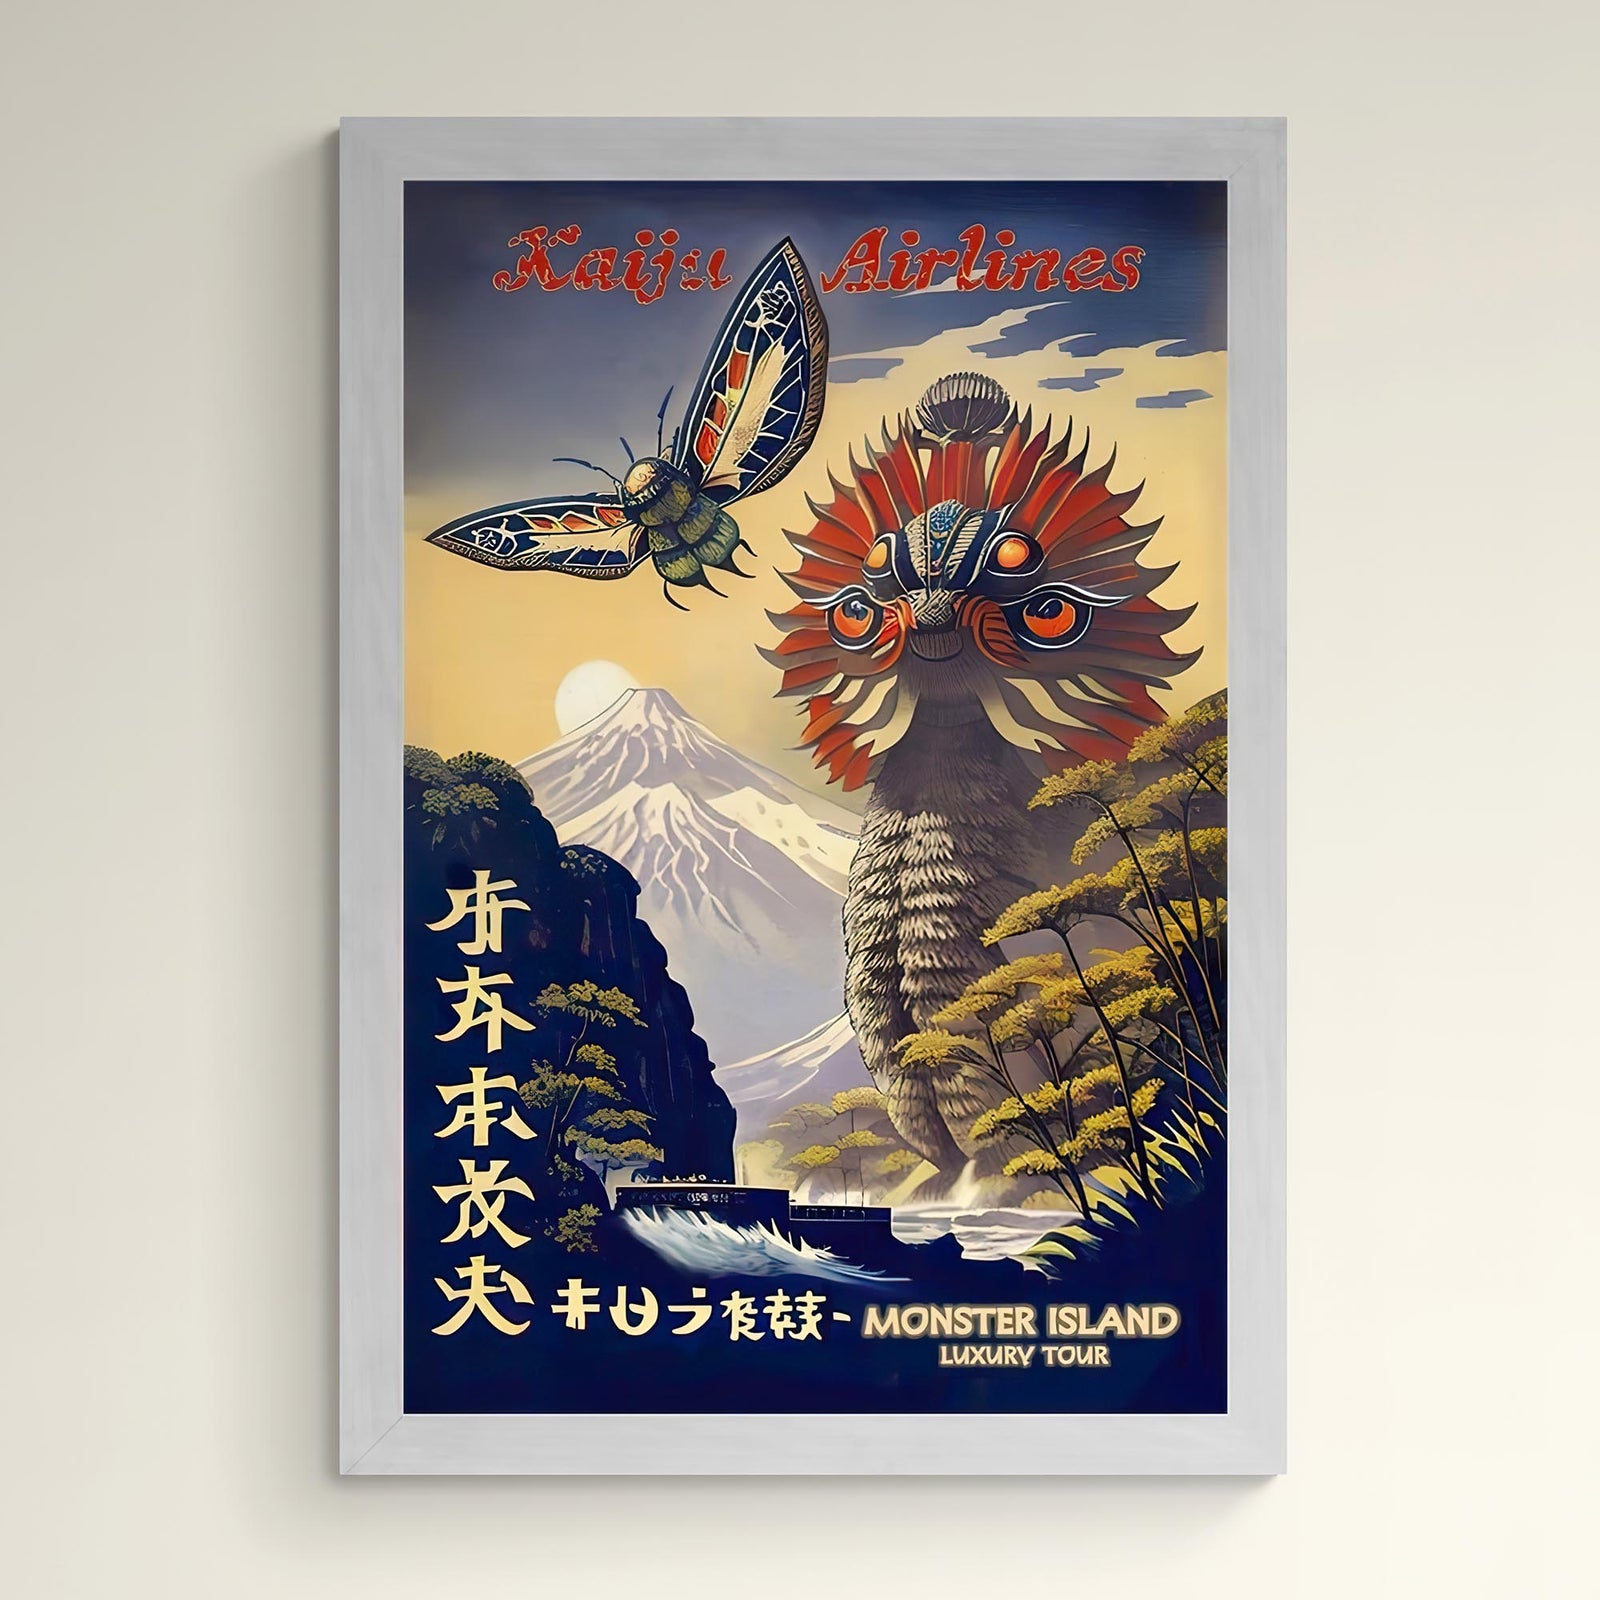 Fine art 8"x12" / Silver Frame Kaiju Airlines, Monster Island Luxury Tour | Surreal Vintage Travel Poster |  Godzilla, Ghidorah, Mothra, Rodan, Gamera Antique Framed Art Print